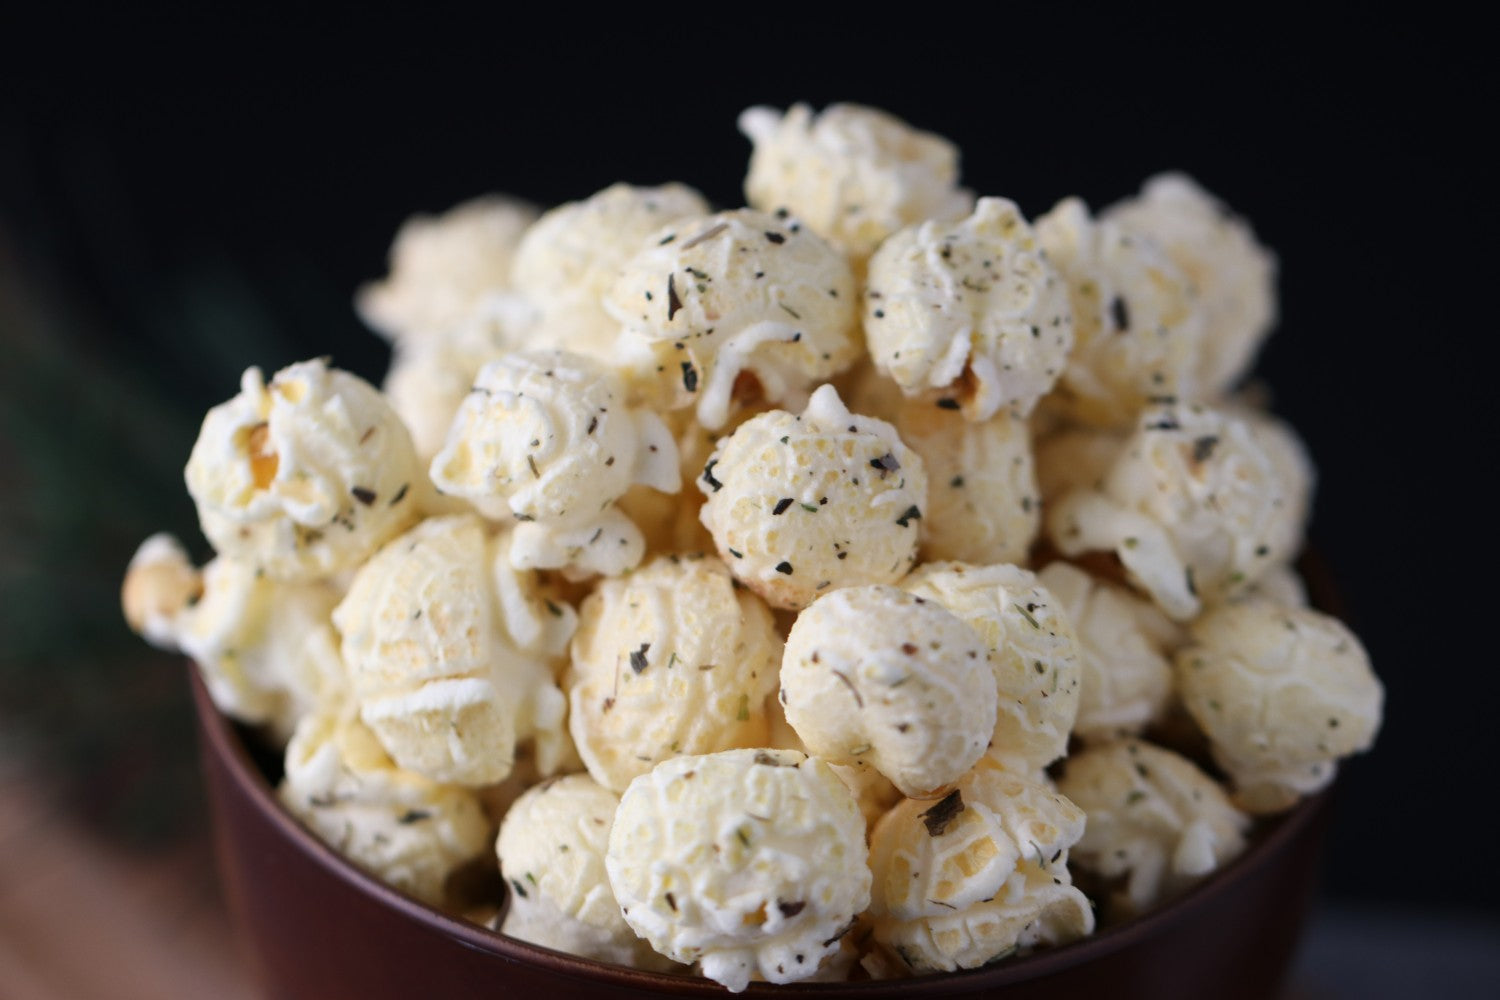 Parmesan and Herbs Popcorn